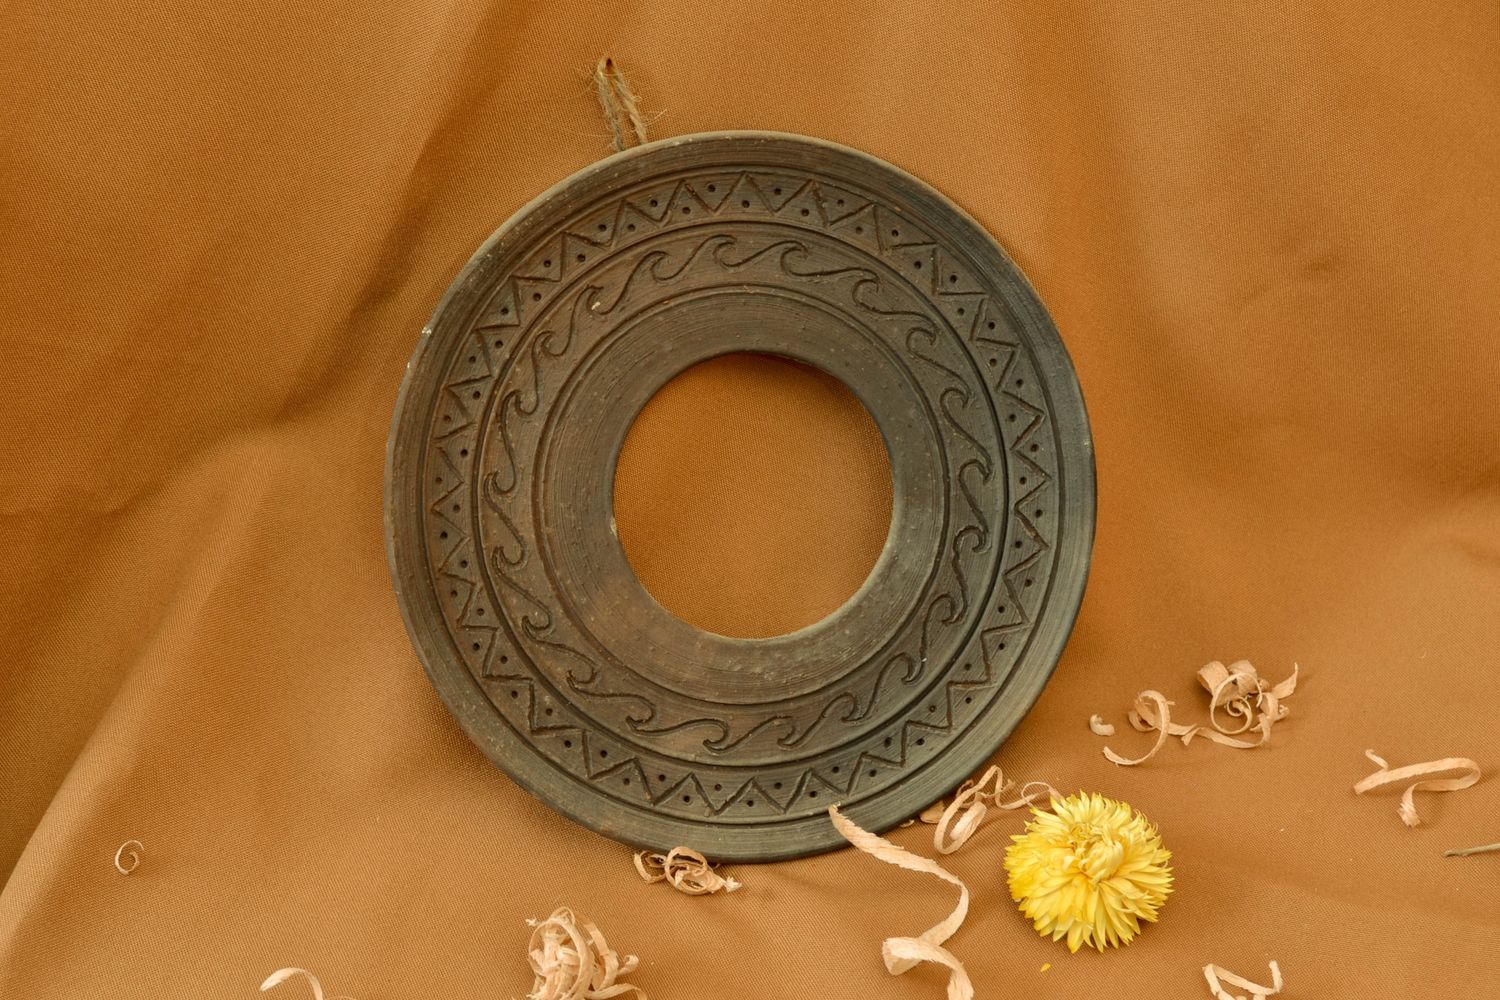 Handmade decorative ceramic plate kilned with milk photo 1